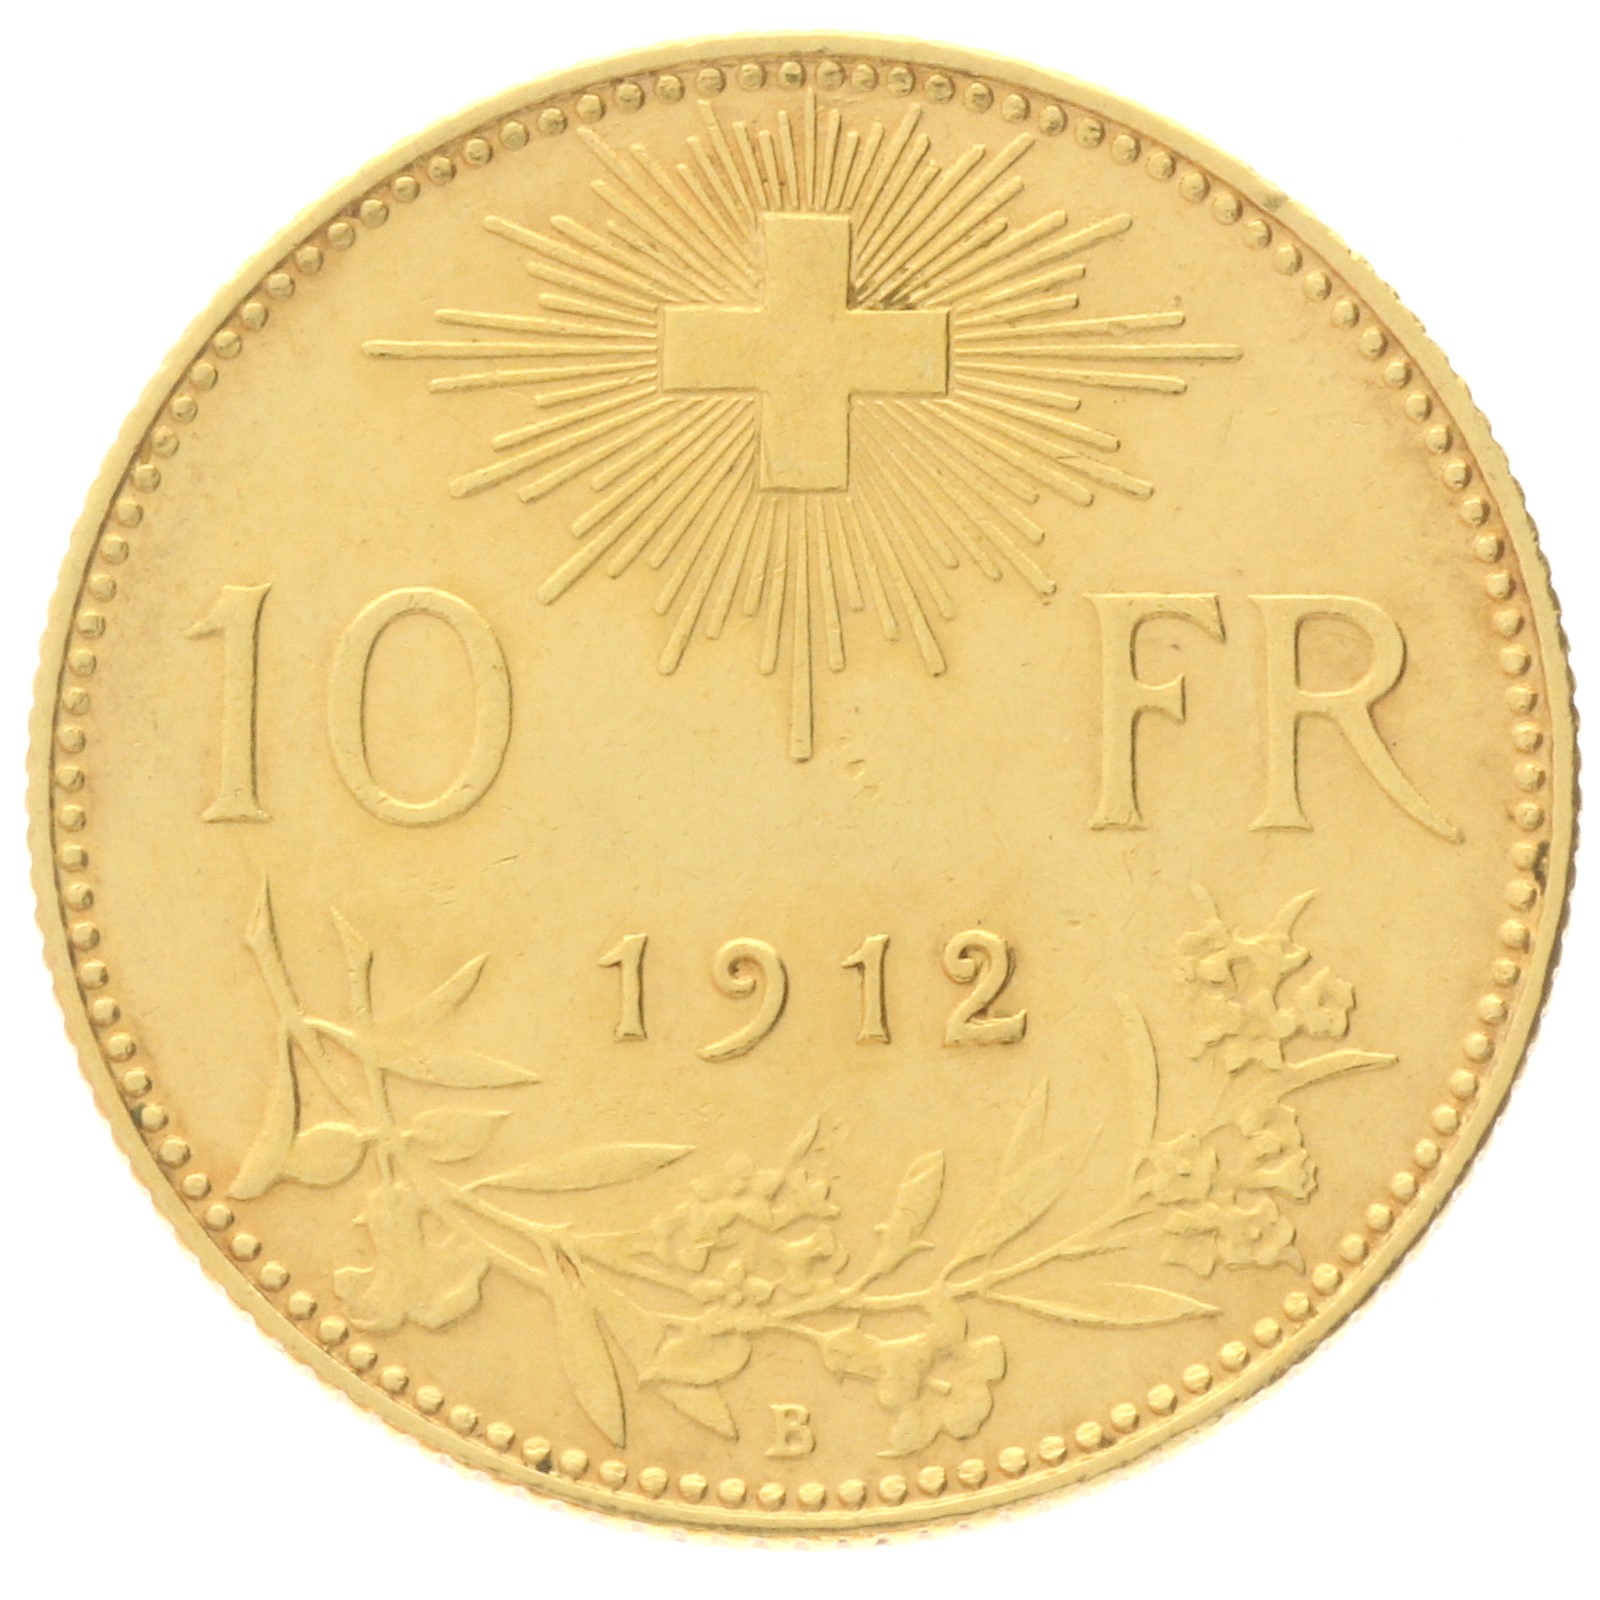 Switzerland - 10 francs - 1912